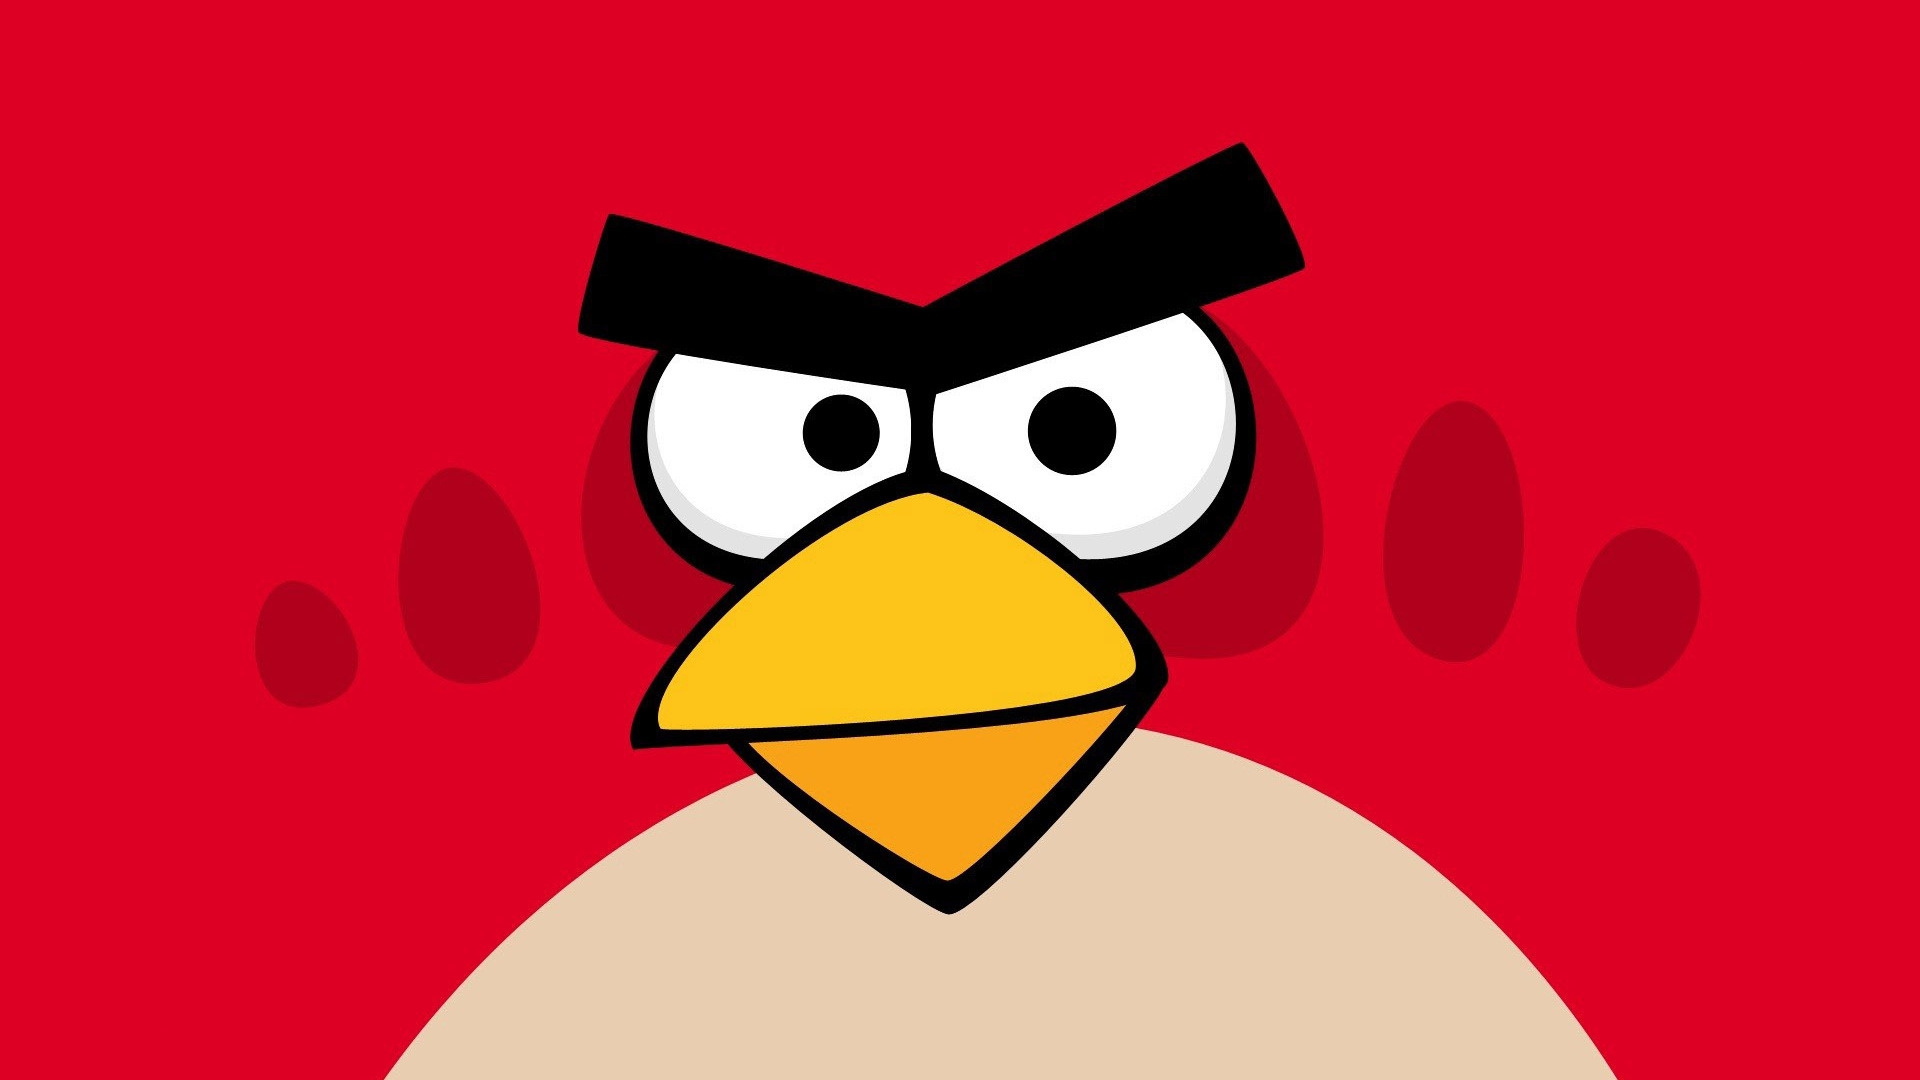 böse vögel leben tapete,wütende vögel,rot,karikatur,vogel,videospielsoftware